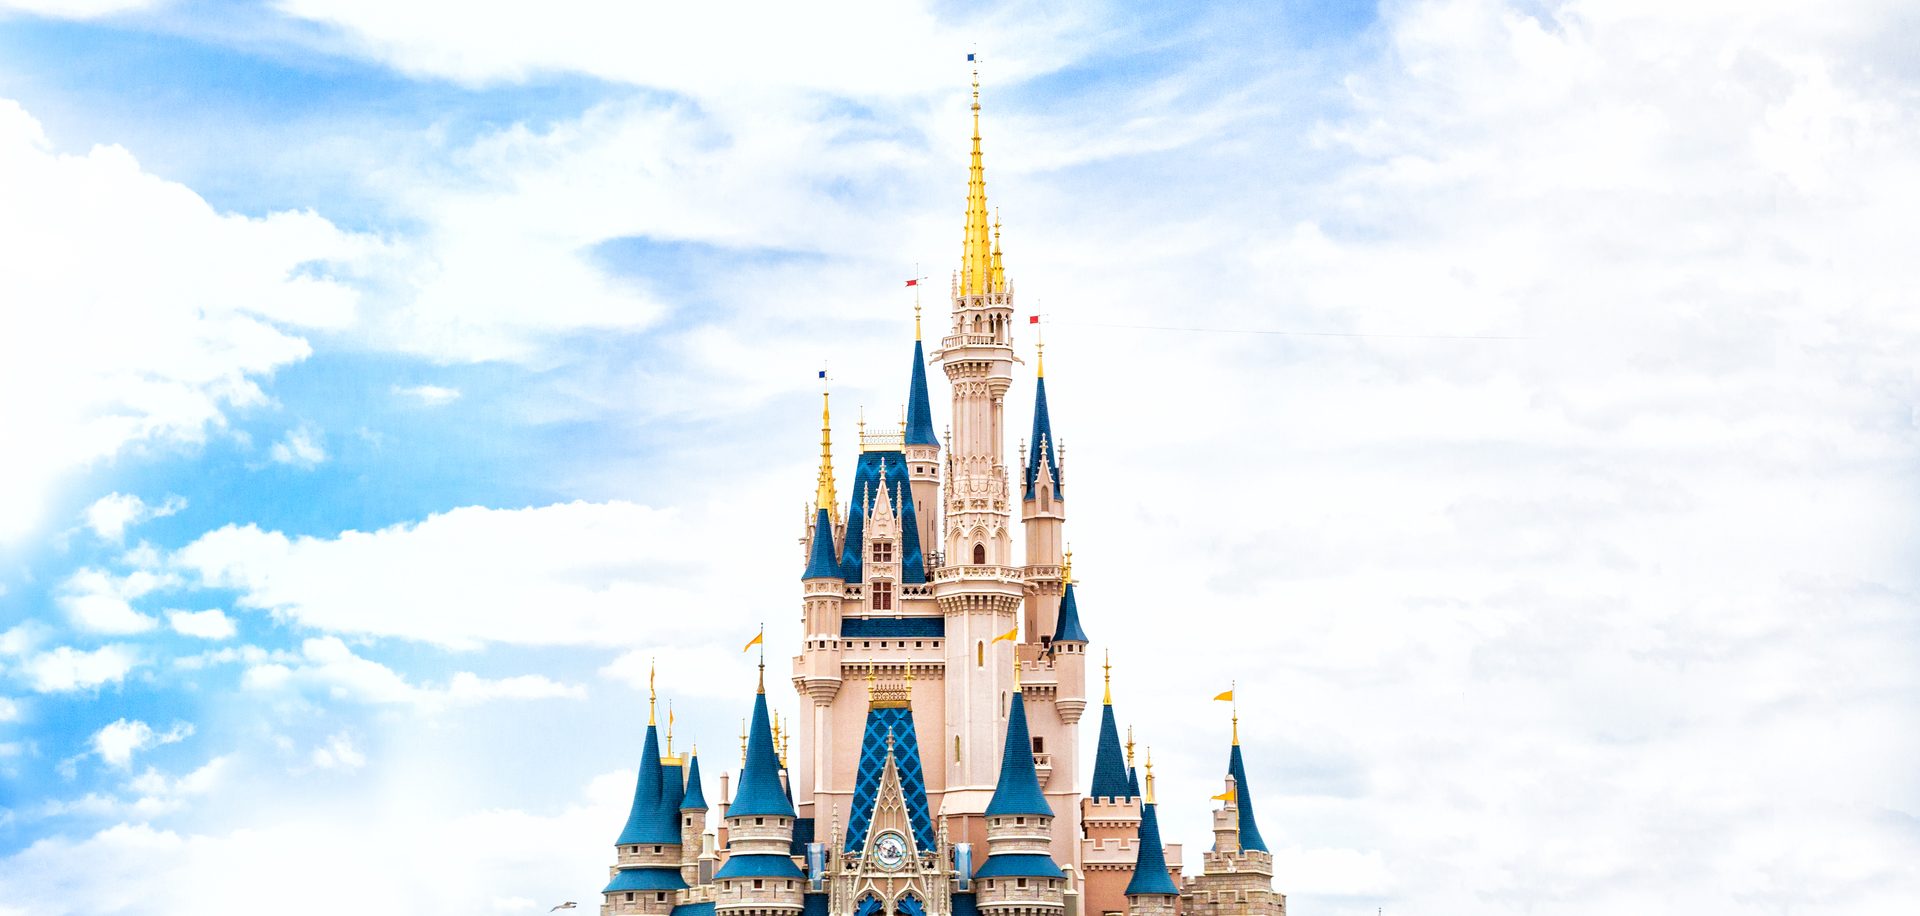 Cinderella's castle at Magic Kingdom Disneyland